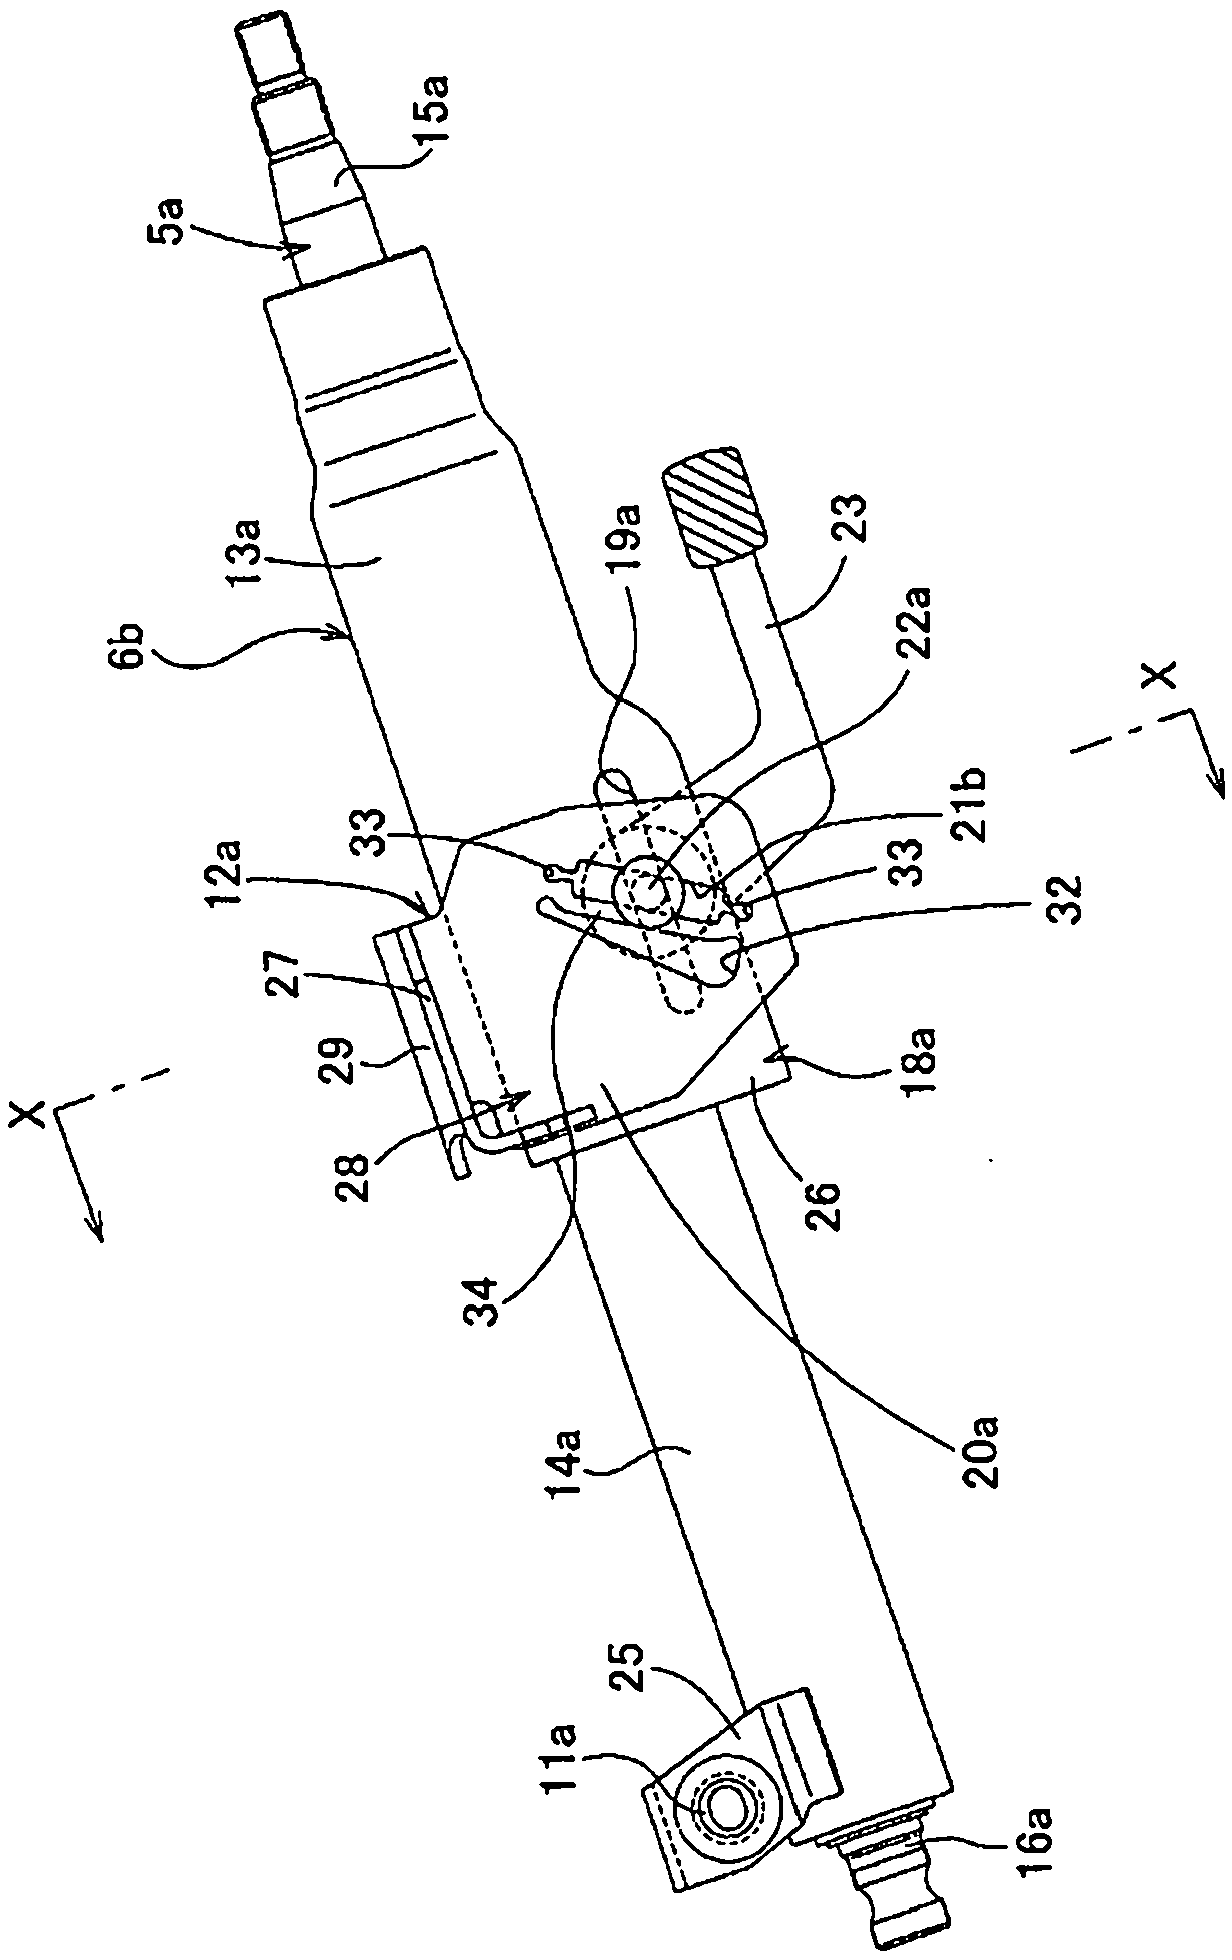 Steering column device